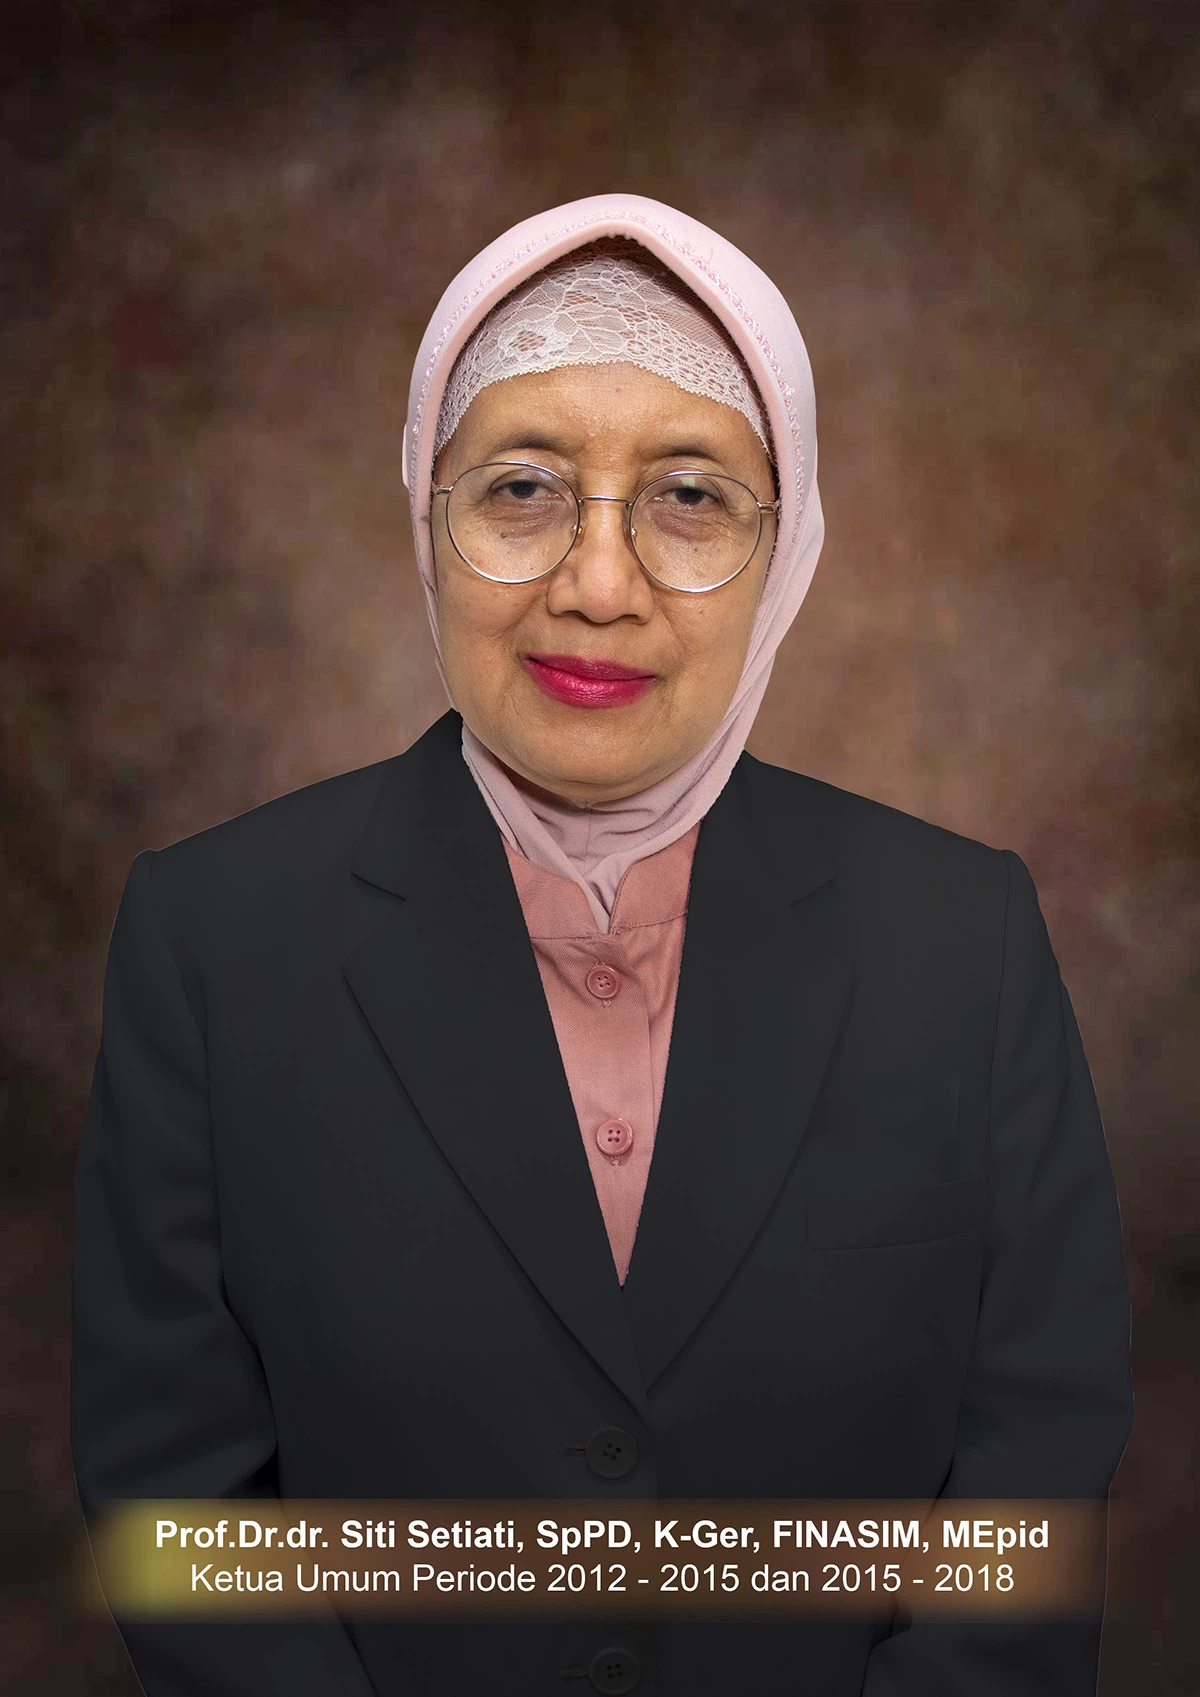 Prof.Dr.dr. Siti Setiati, SpPD, K-Ger, MEpid, FINASIM